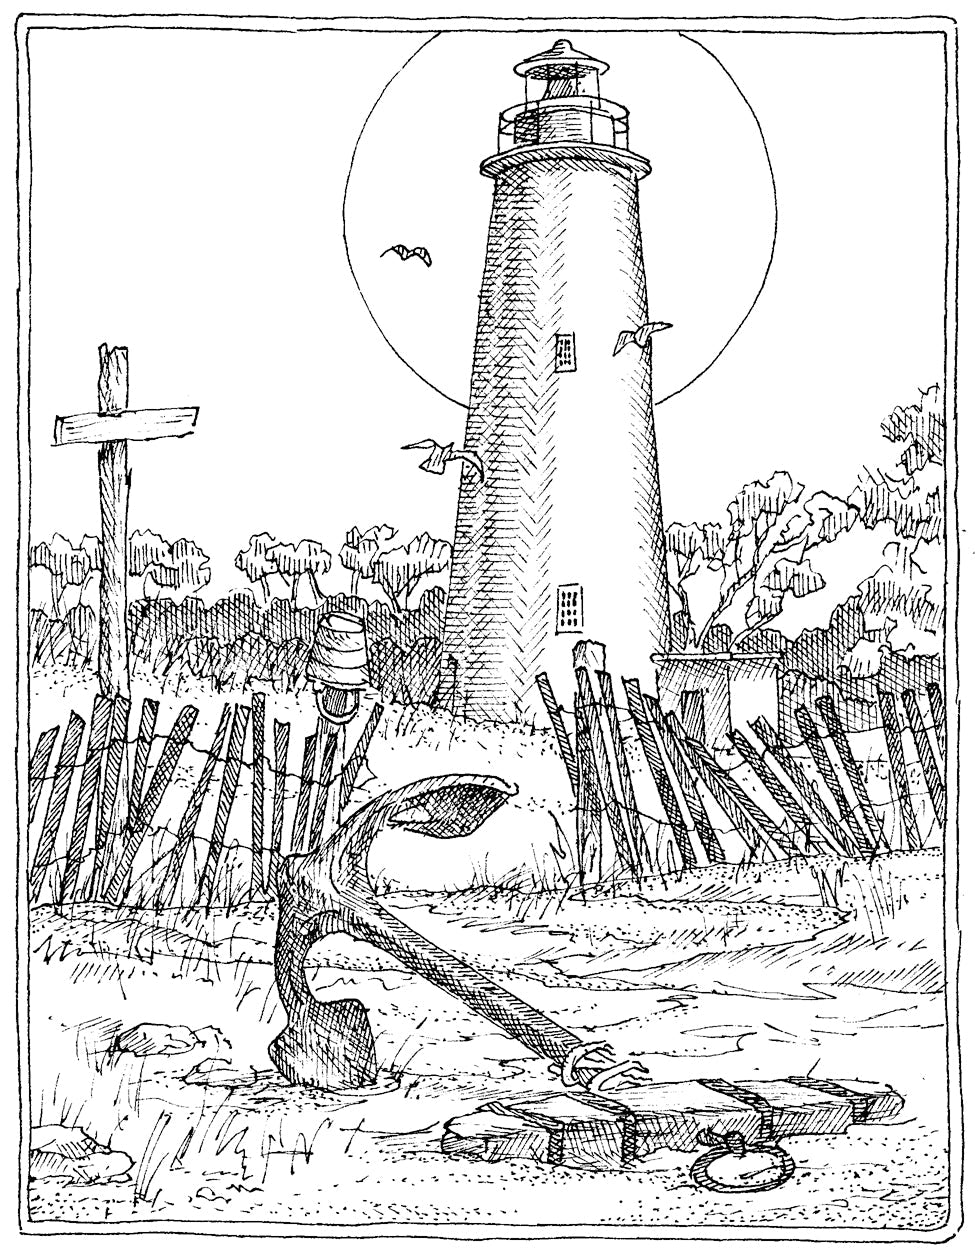 H1914-DG Ocracoke Island Lighthouse